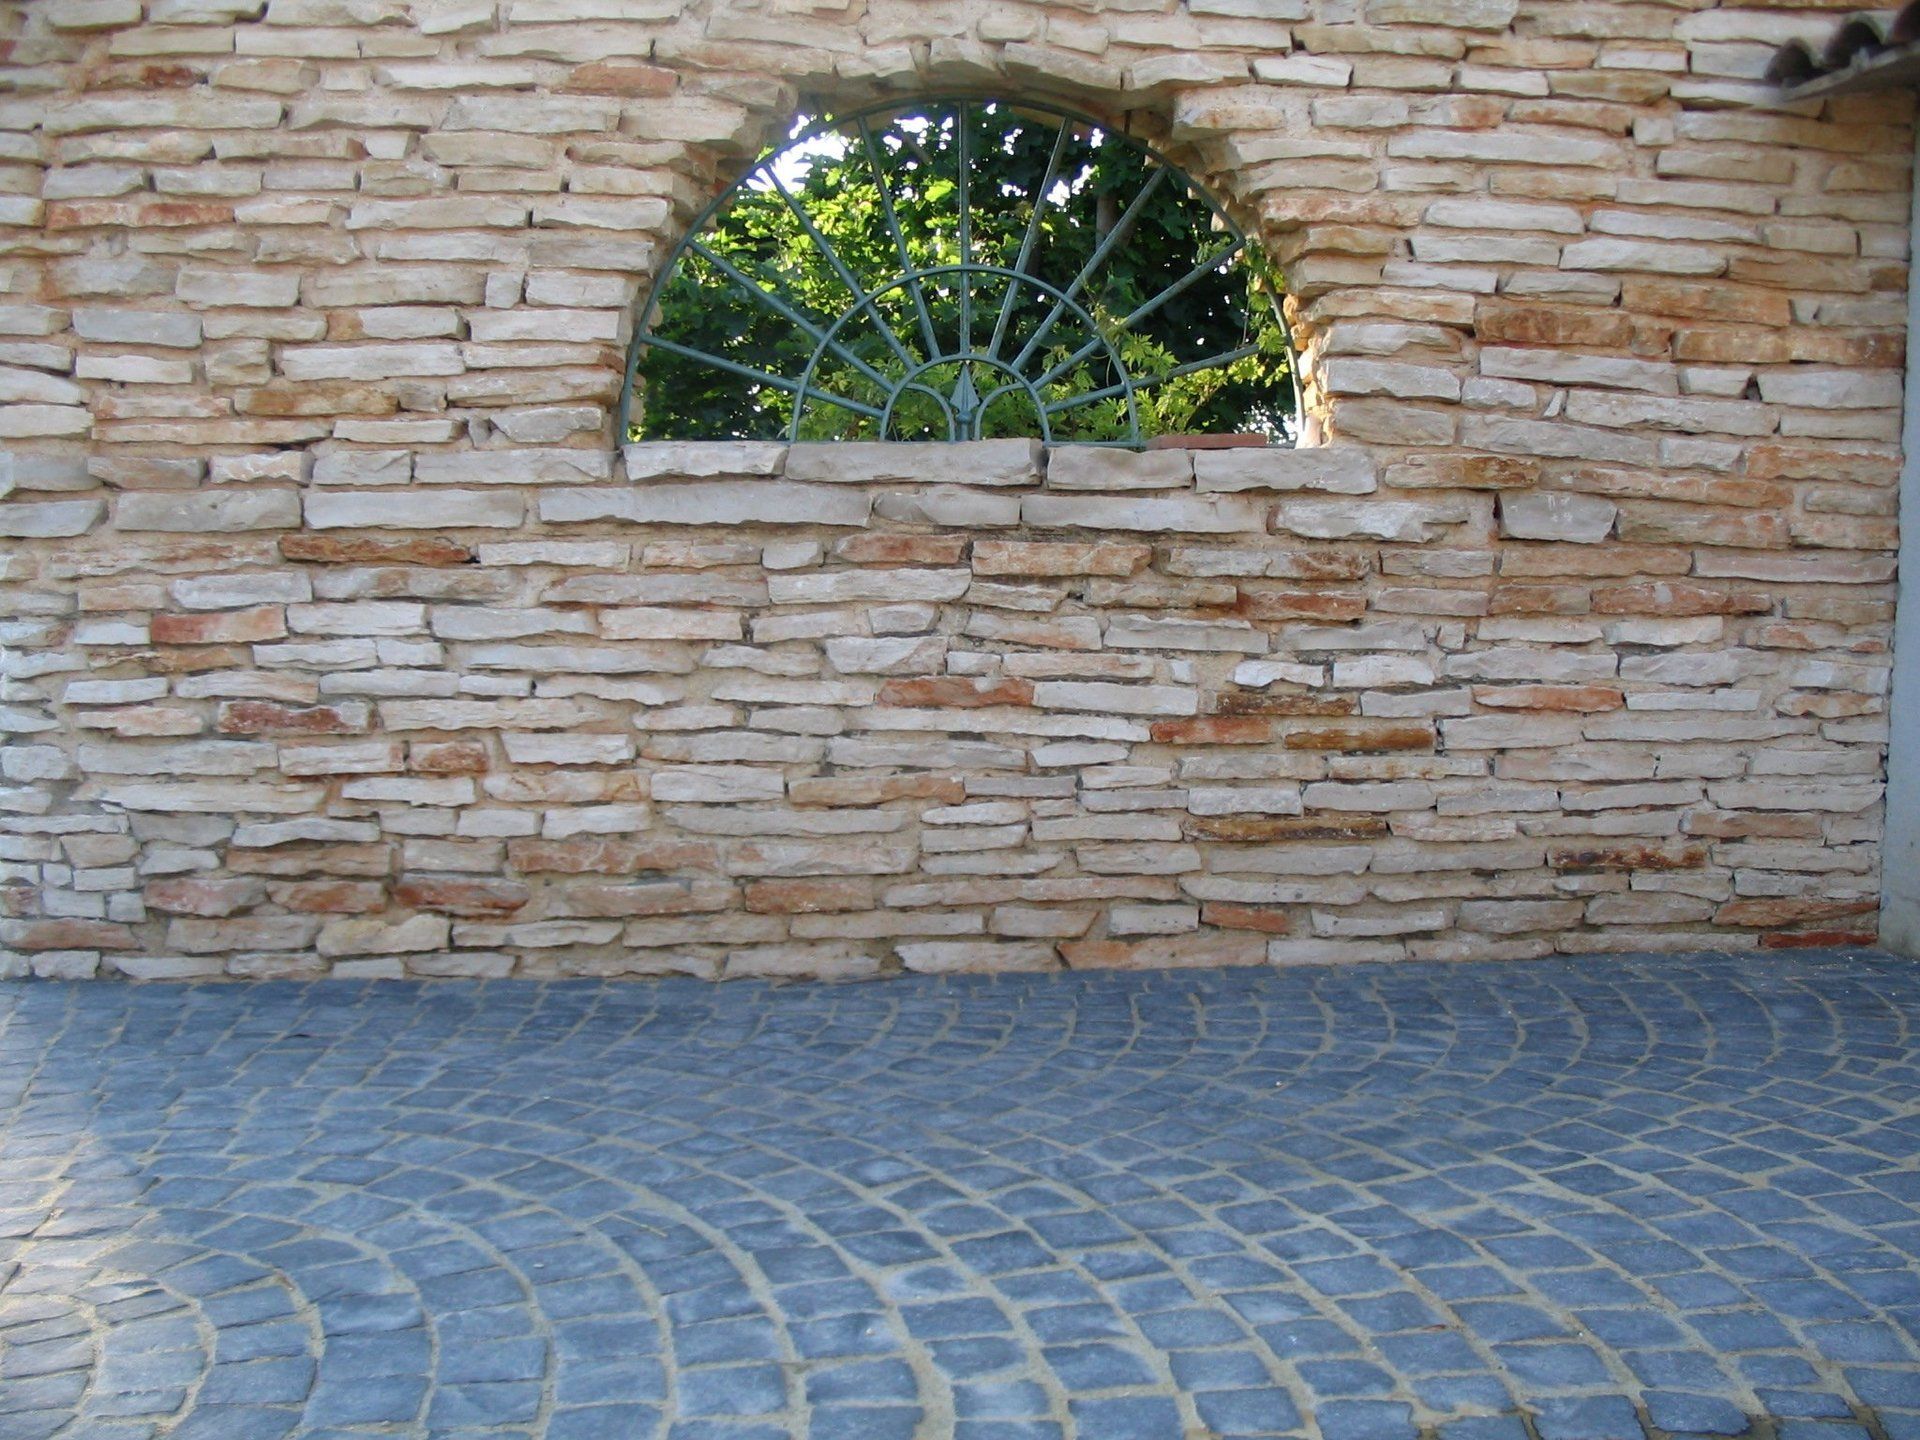 pietra-castelli-romani-marino-054-1920w.jpg 